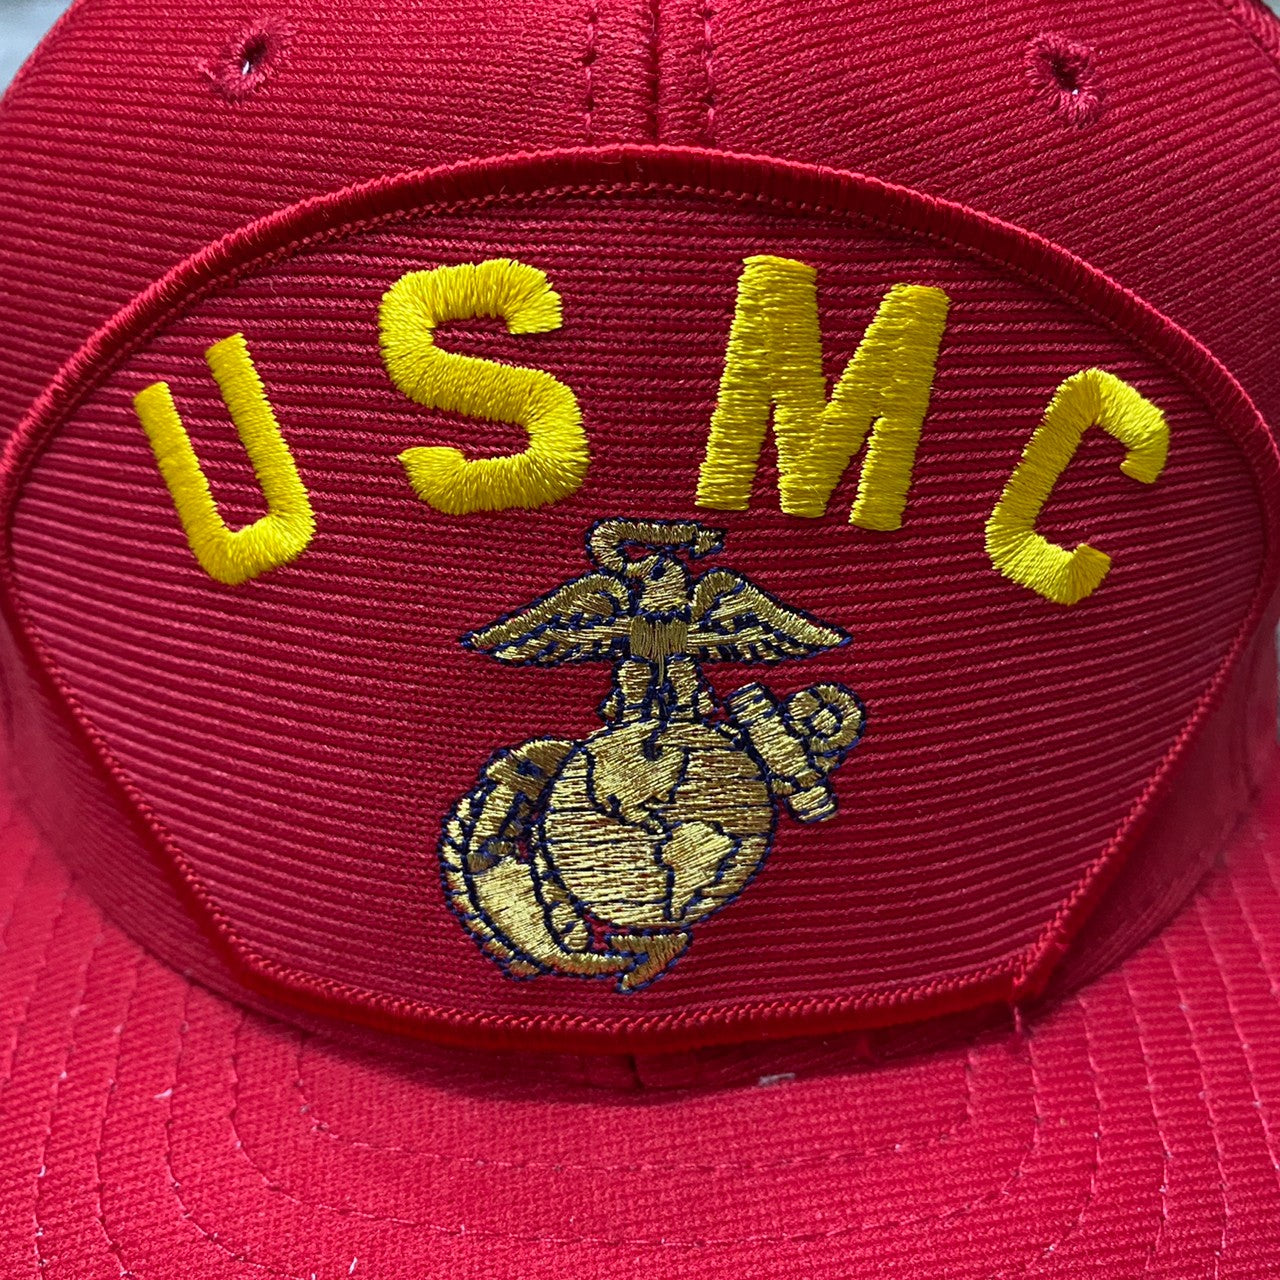 [ ONLY ONE ! ] USMC BB CAP / EAGLE CREST